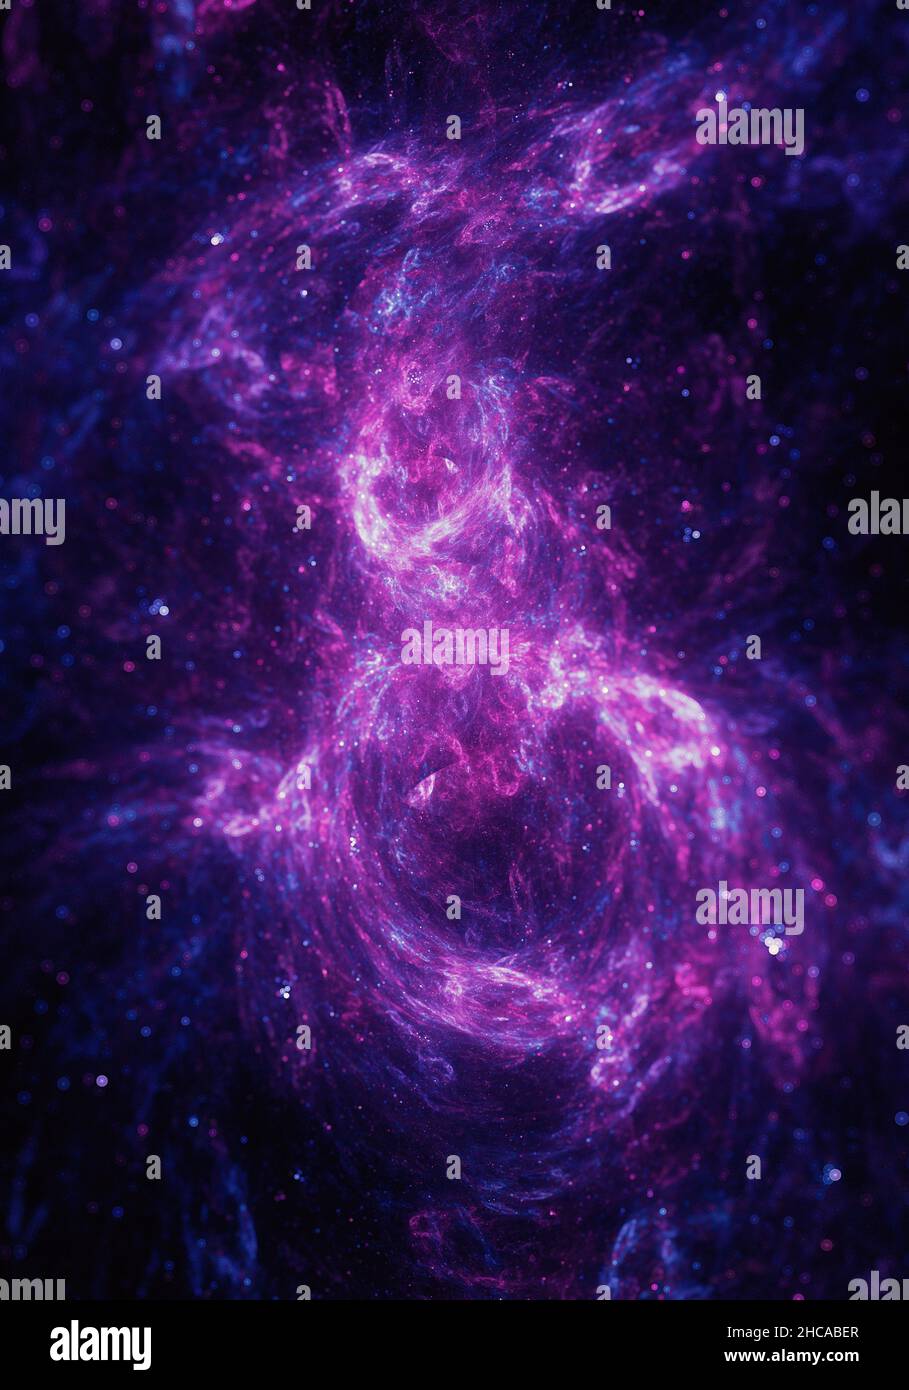 Astrophotography blacklight red purple nebula galaxy - space hyper color stars nebula Stock Photo